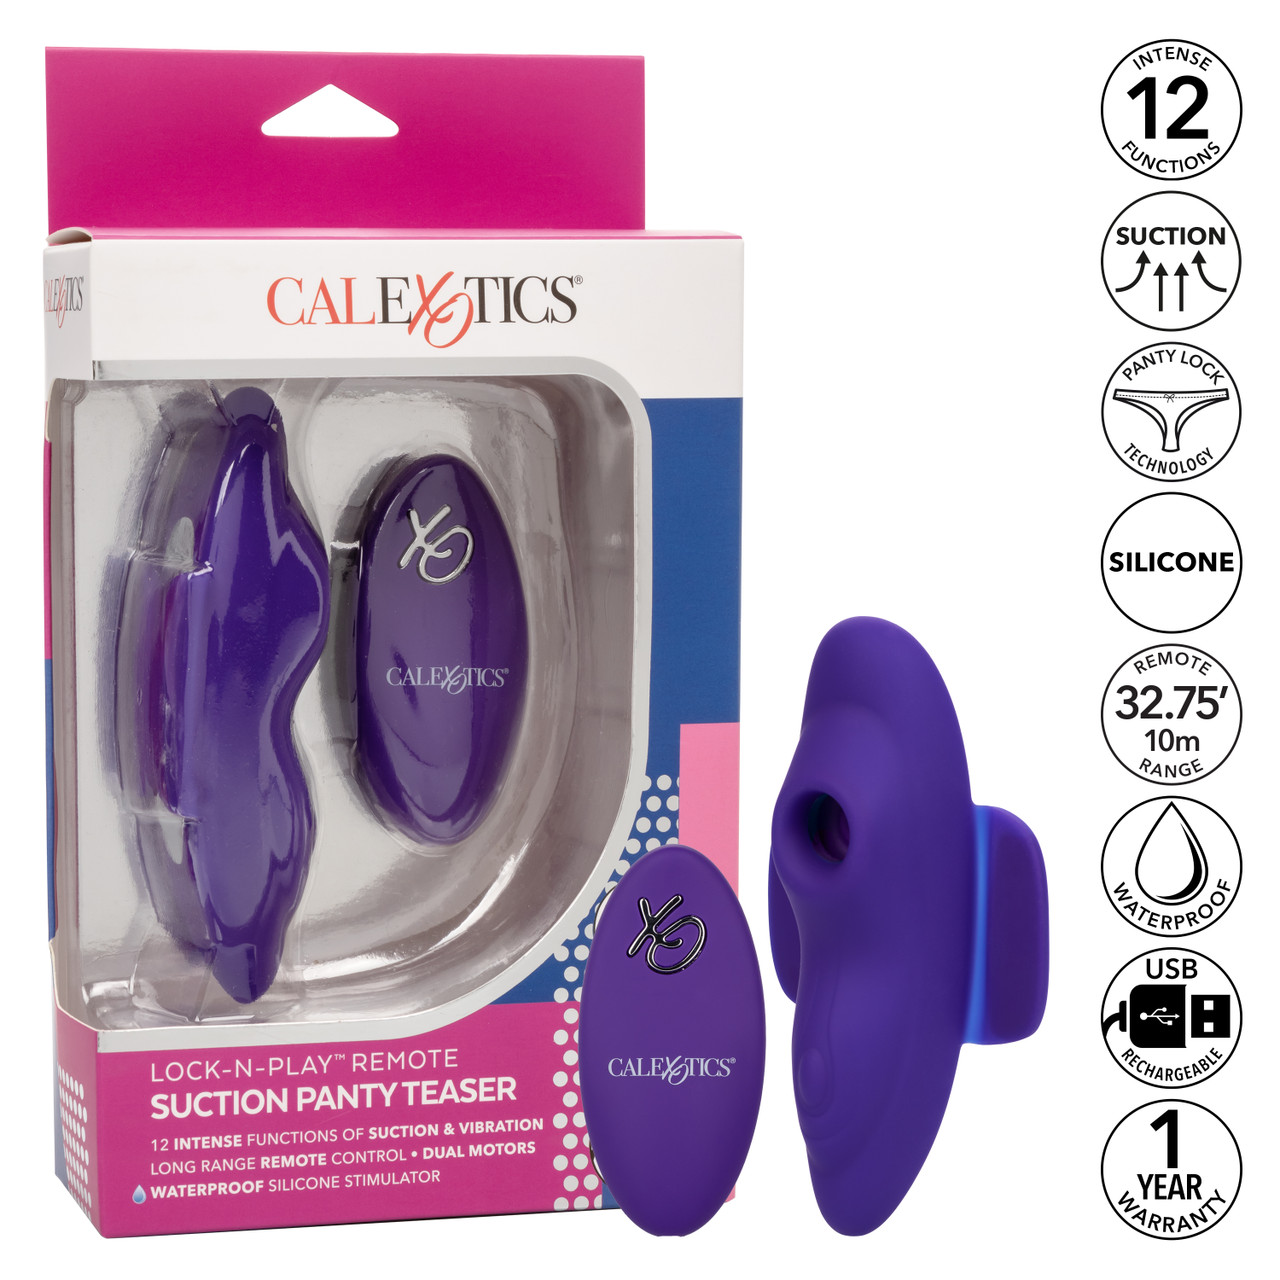 SE-0077-57-3 CalExotics Lock-N-Play Remote Suction Panty Teaser